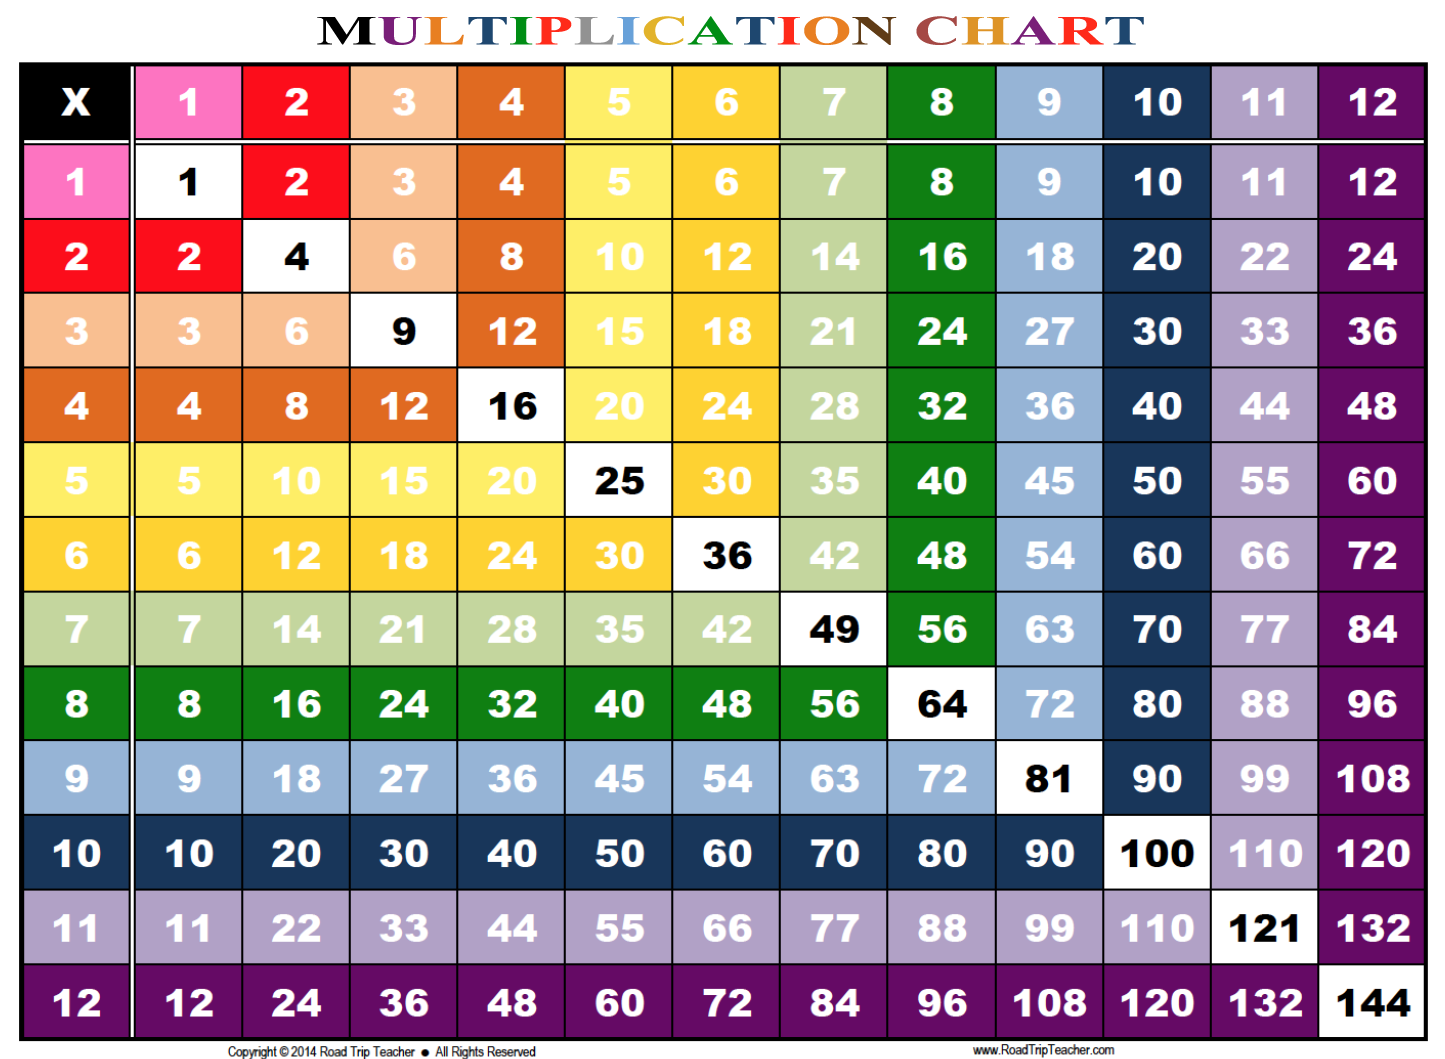 Multiplication Chart 1 12 Printable. Multiplication chart, Multiplication chart printable, Multiplication